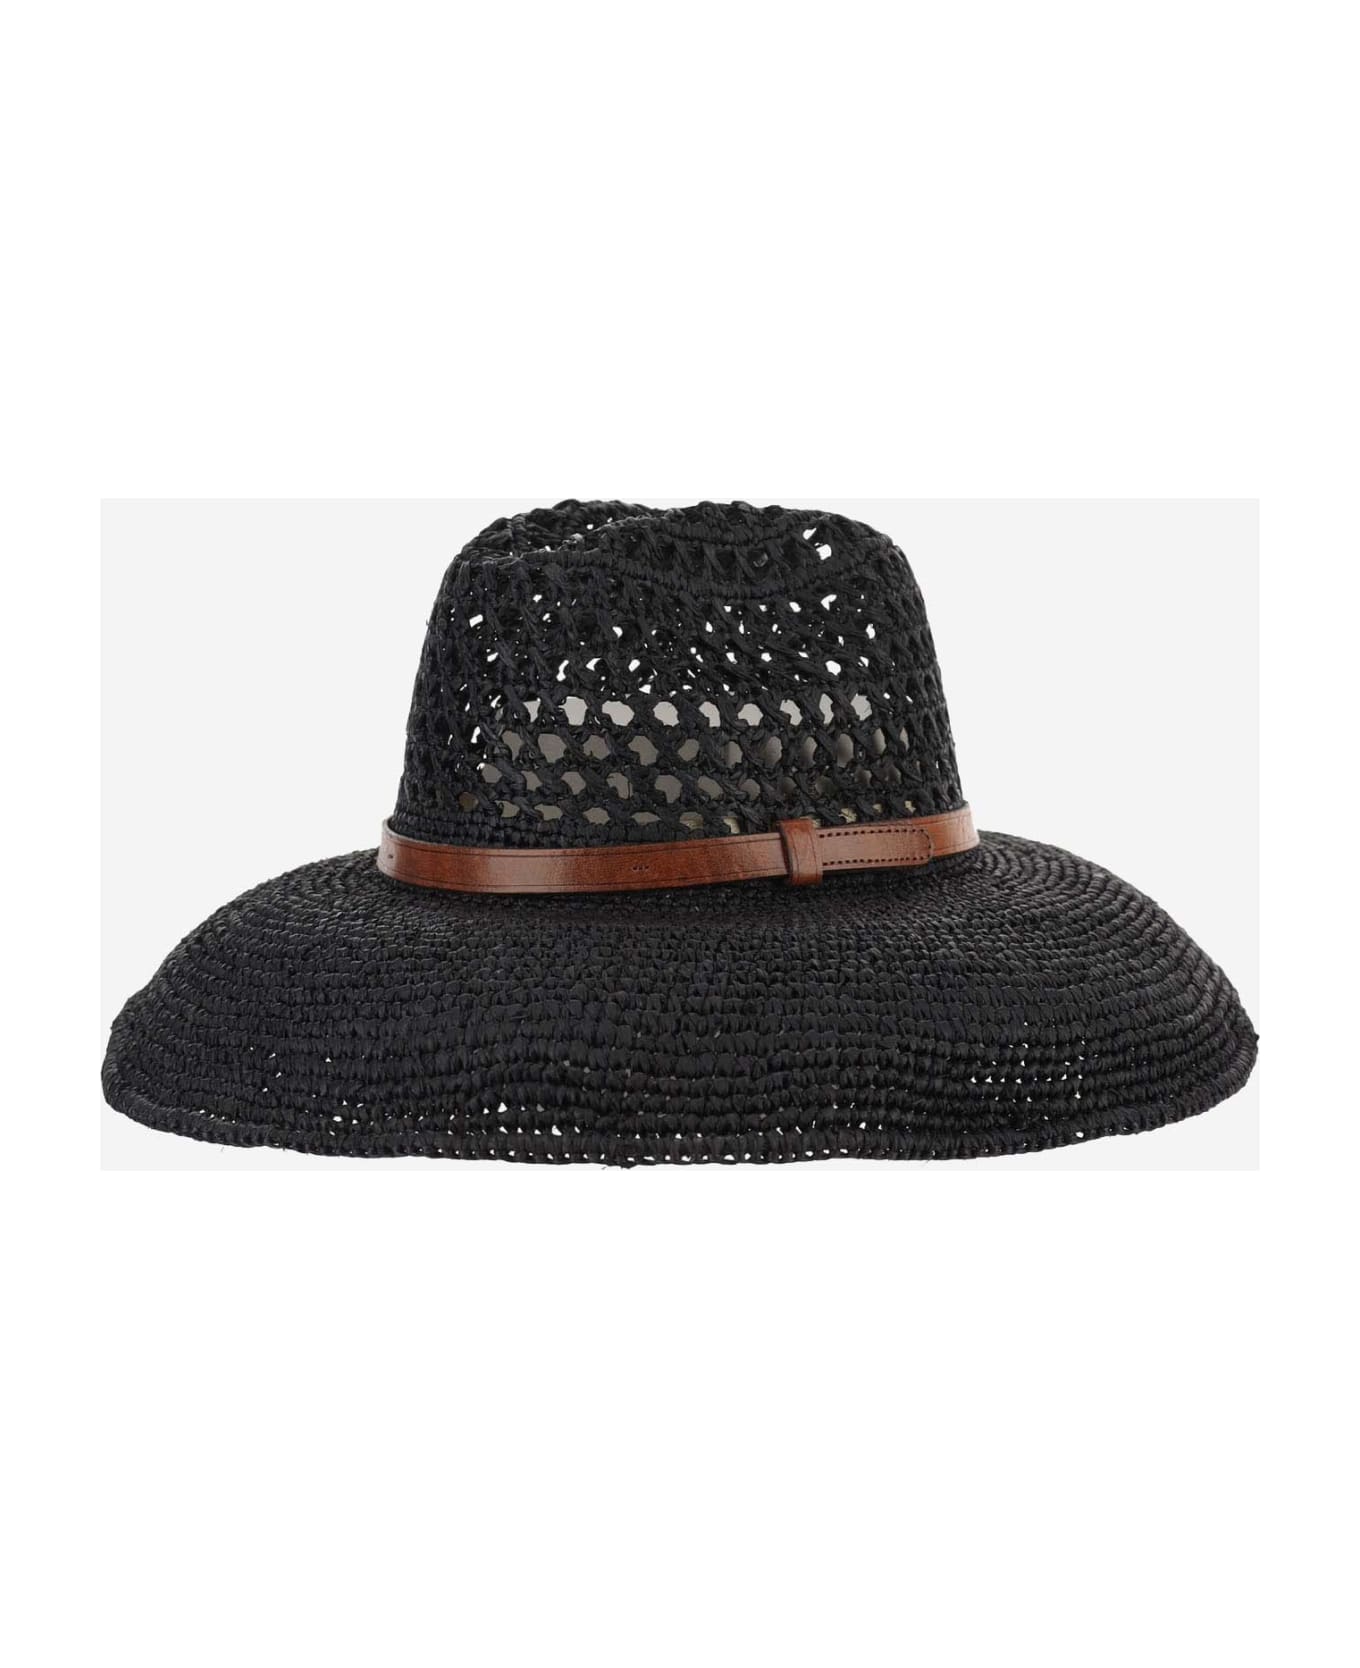 Ibeliv Raffia Hat With Leather Strap - Black